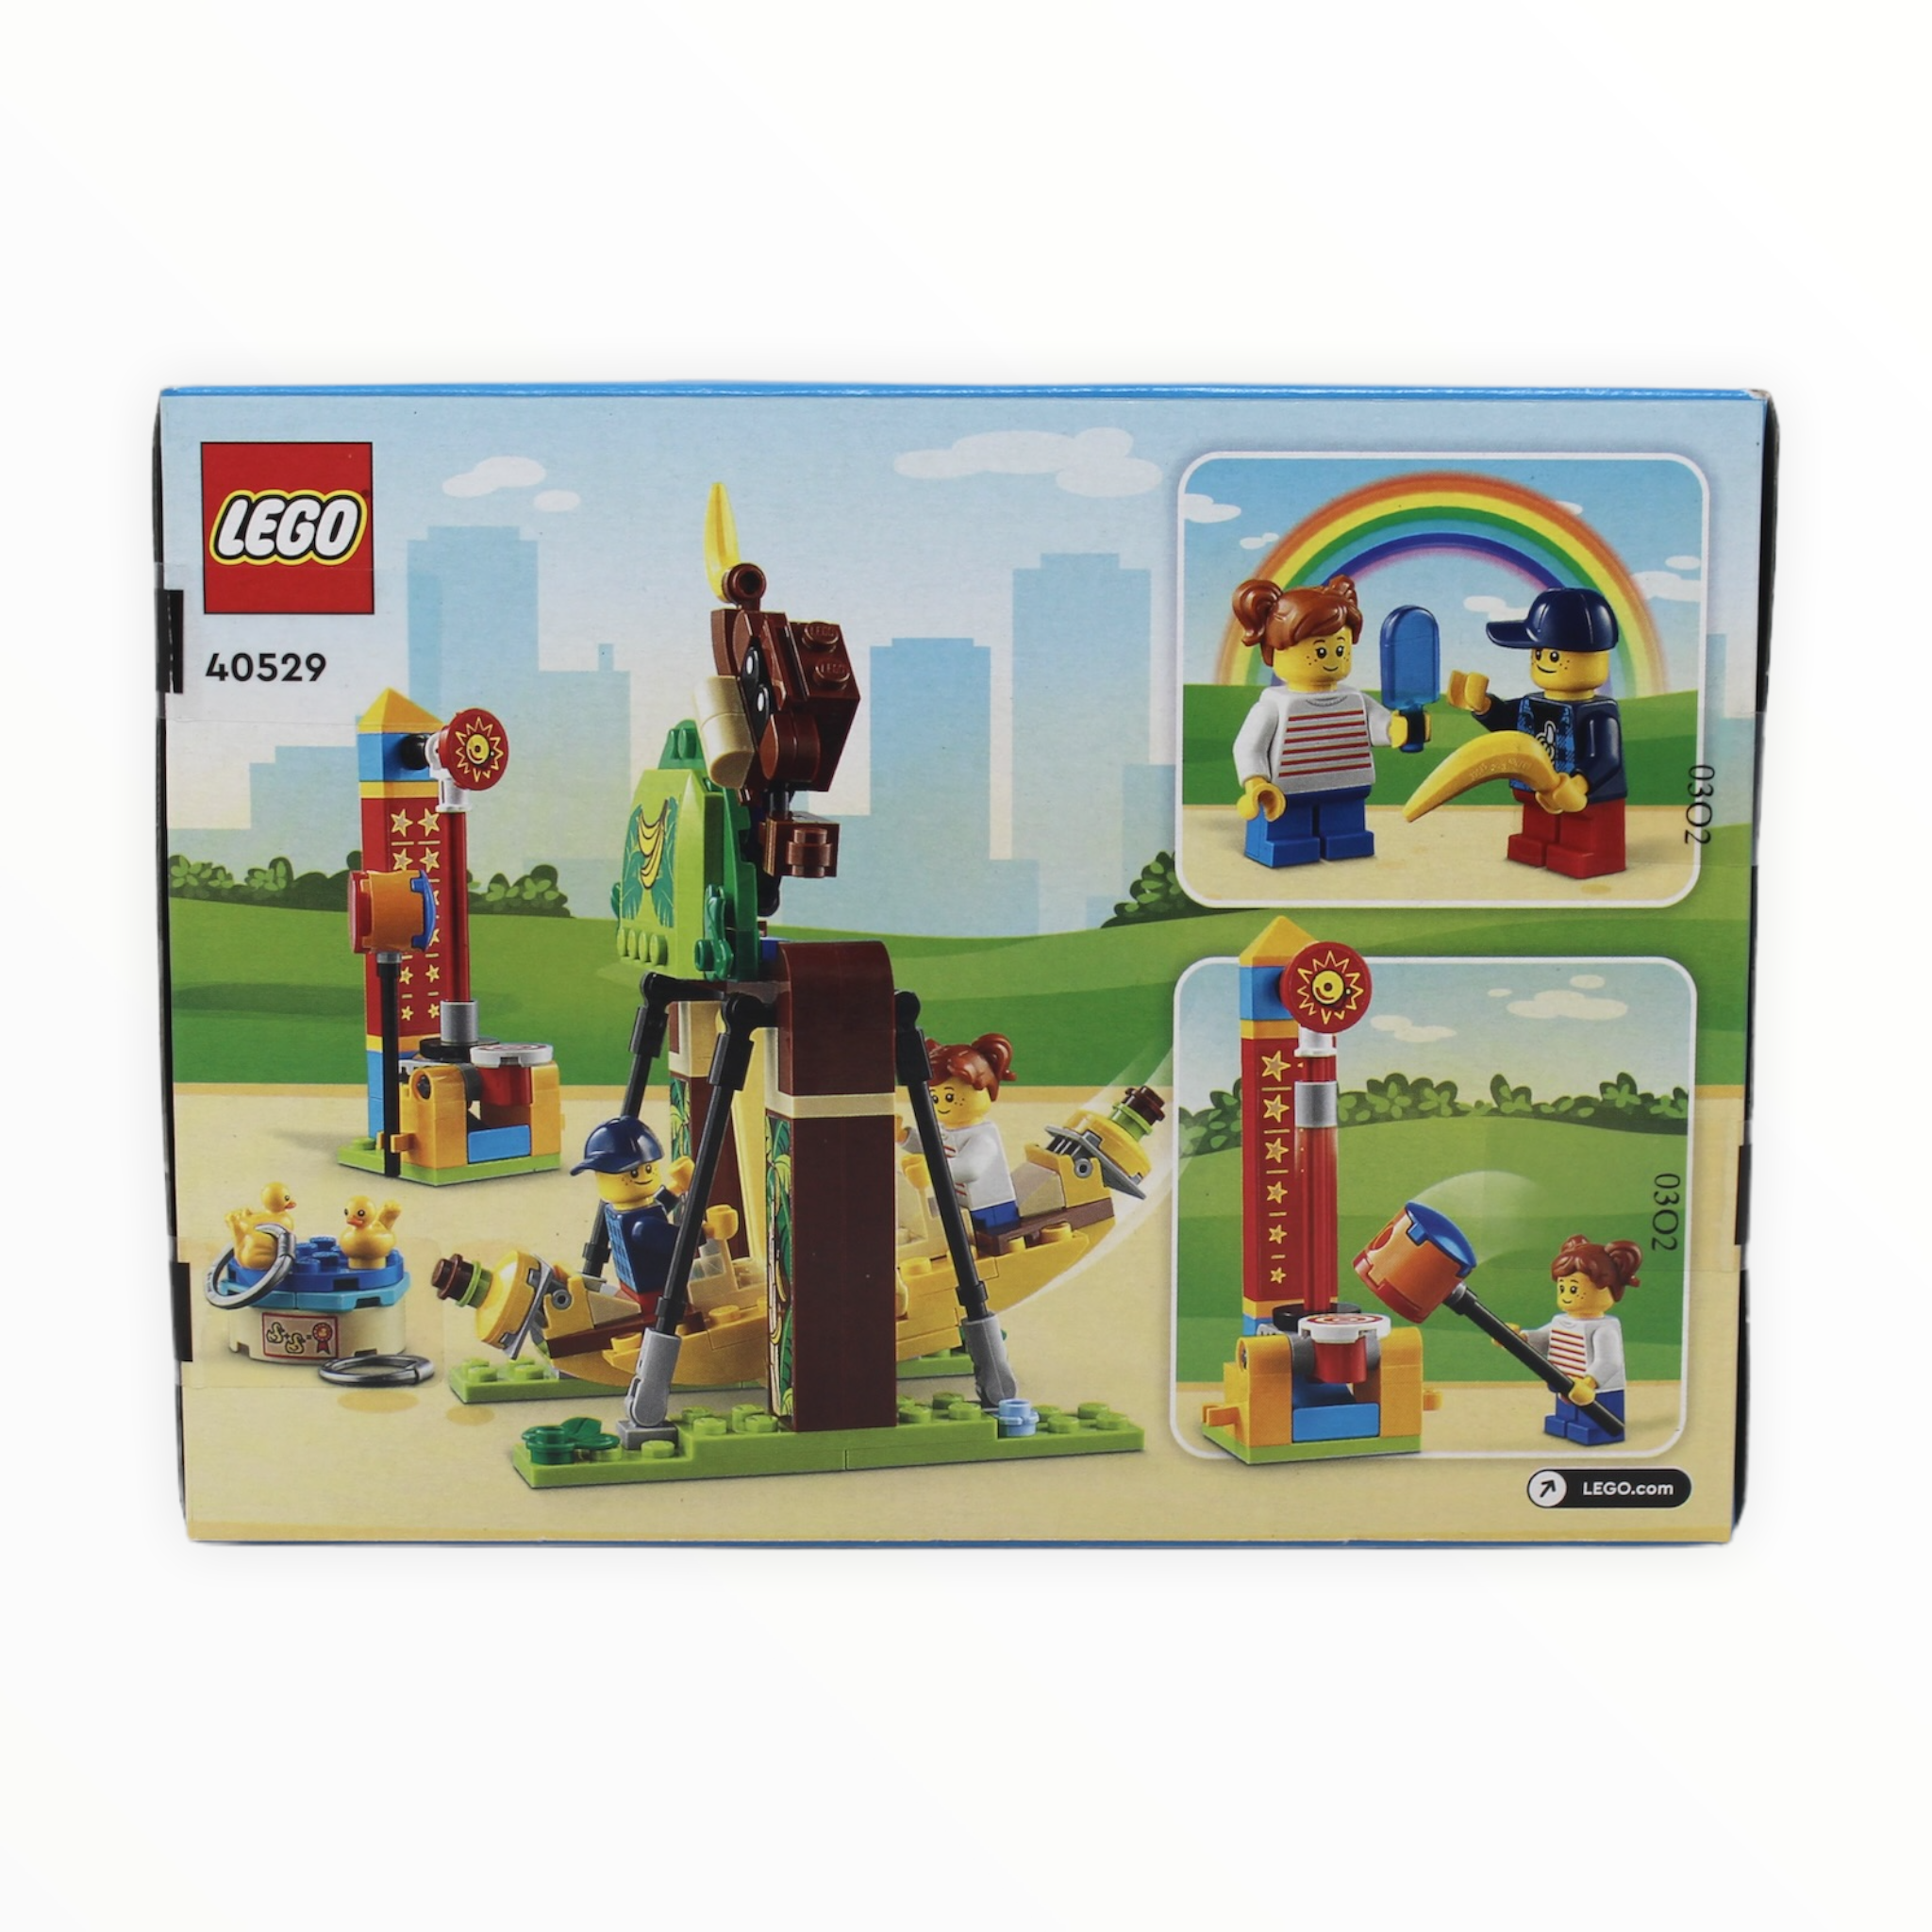 Retired Set 40529 LEGO Children’s Amusement Park